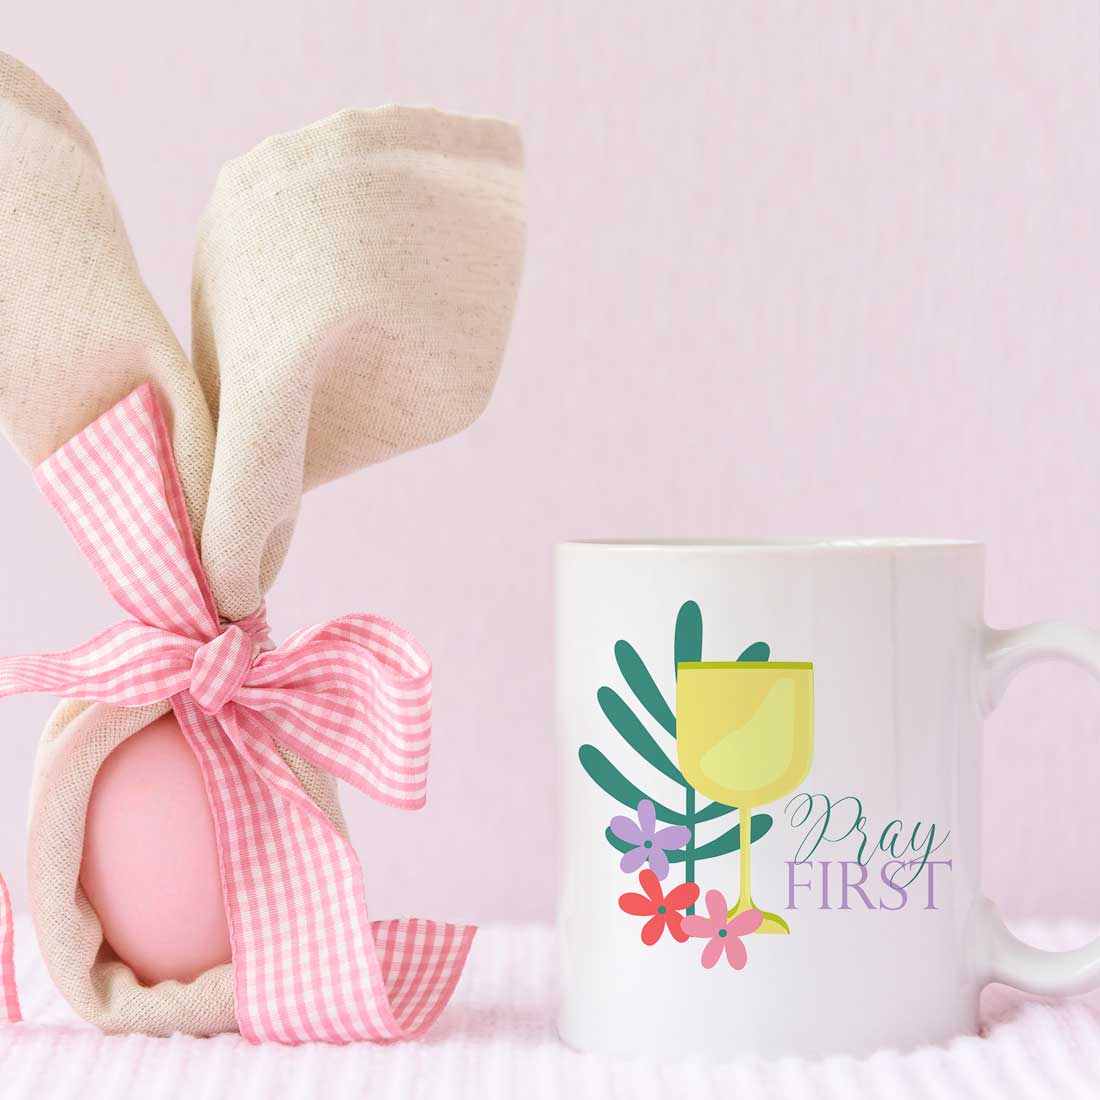 Coffee mug with a pink ribbon tied around it.